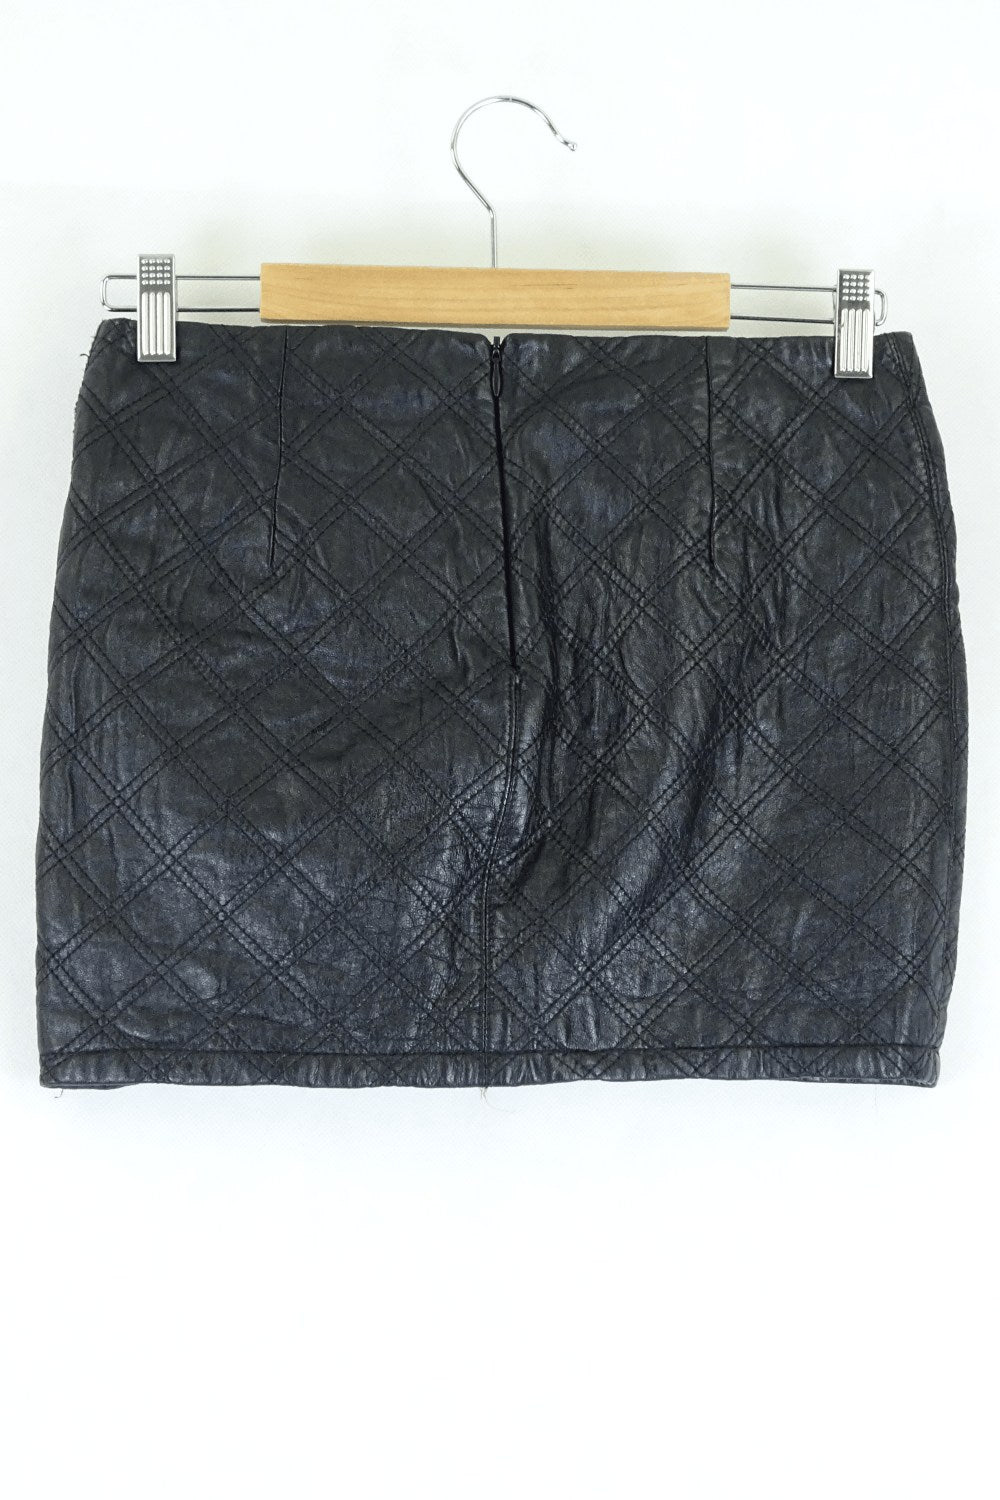 Zara Black Faux Leather Mini Skirt XS